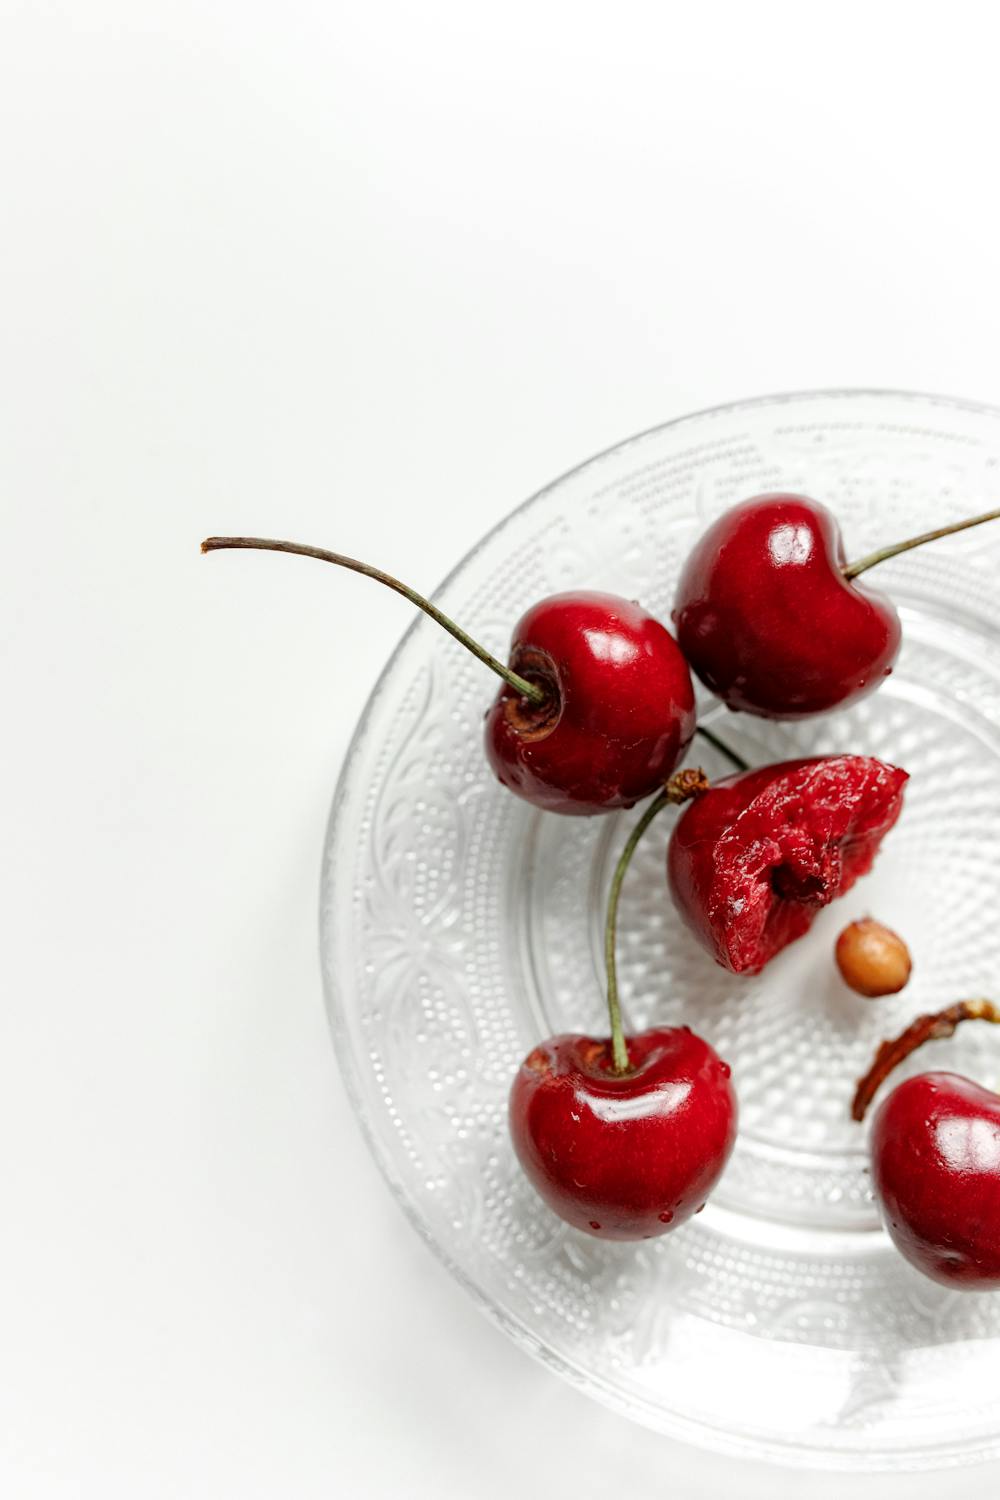 Red Cherries on White Ceramic Plate · Free Stock Photo